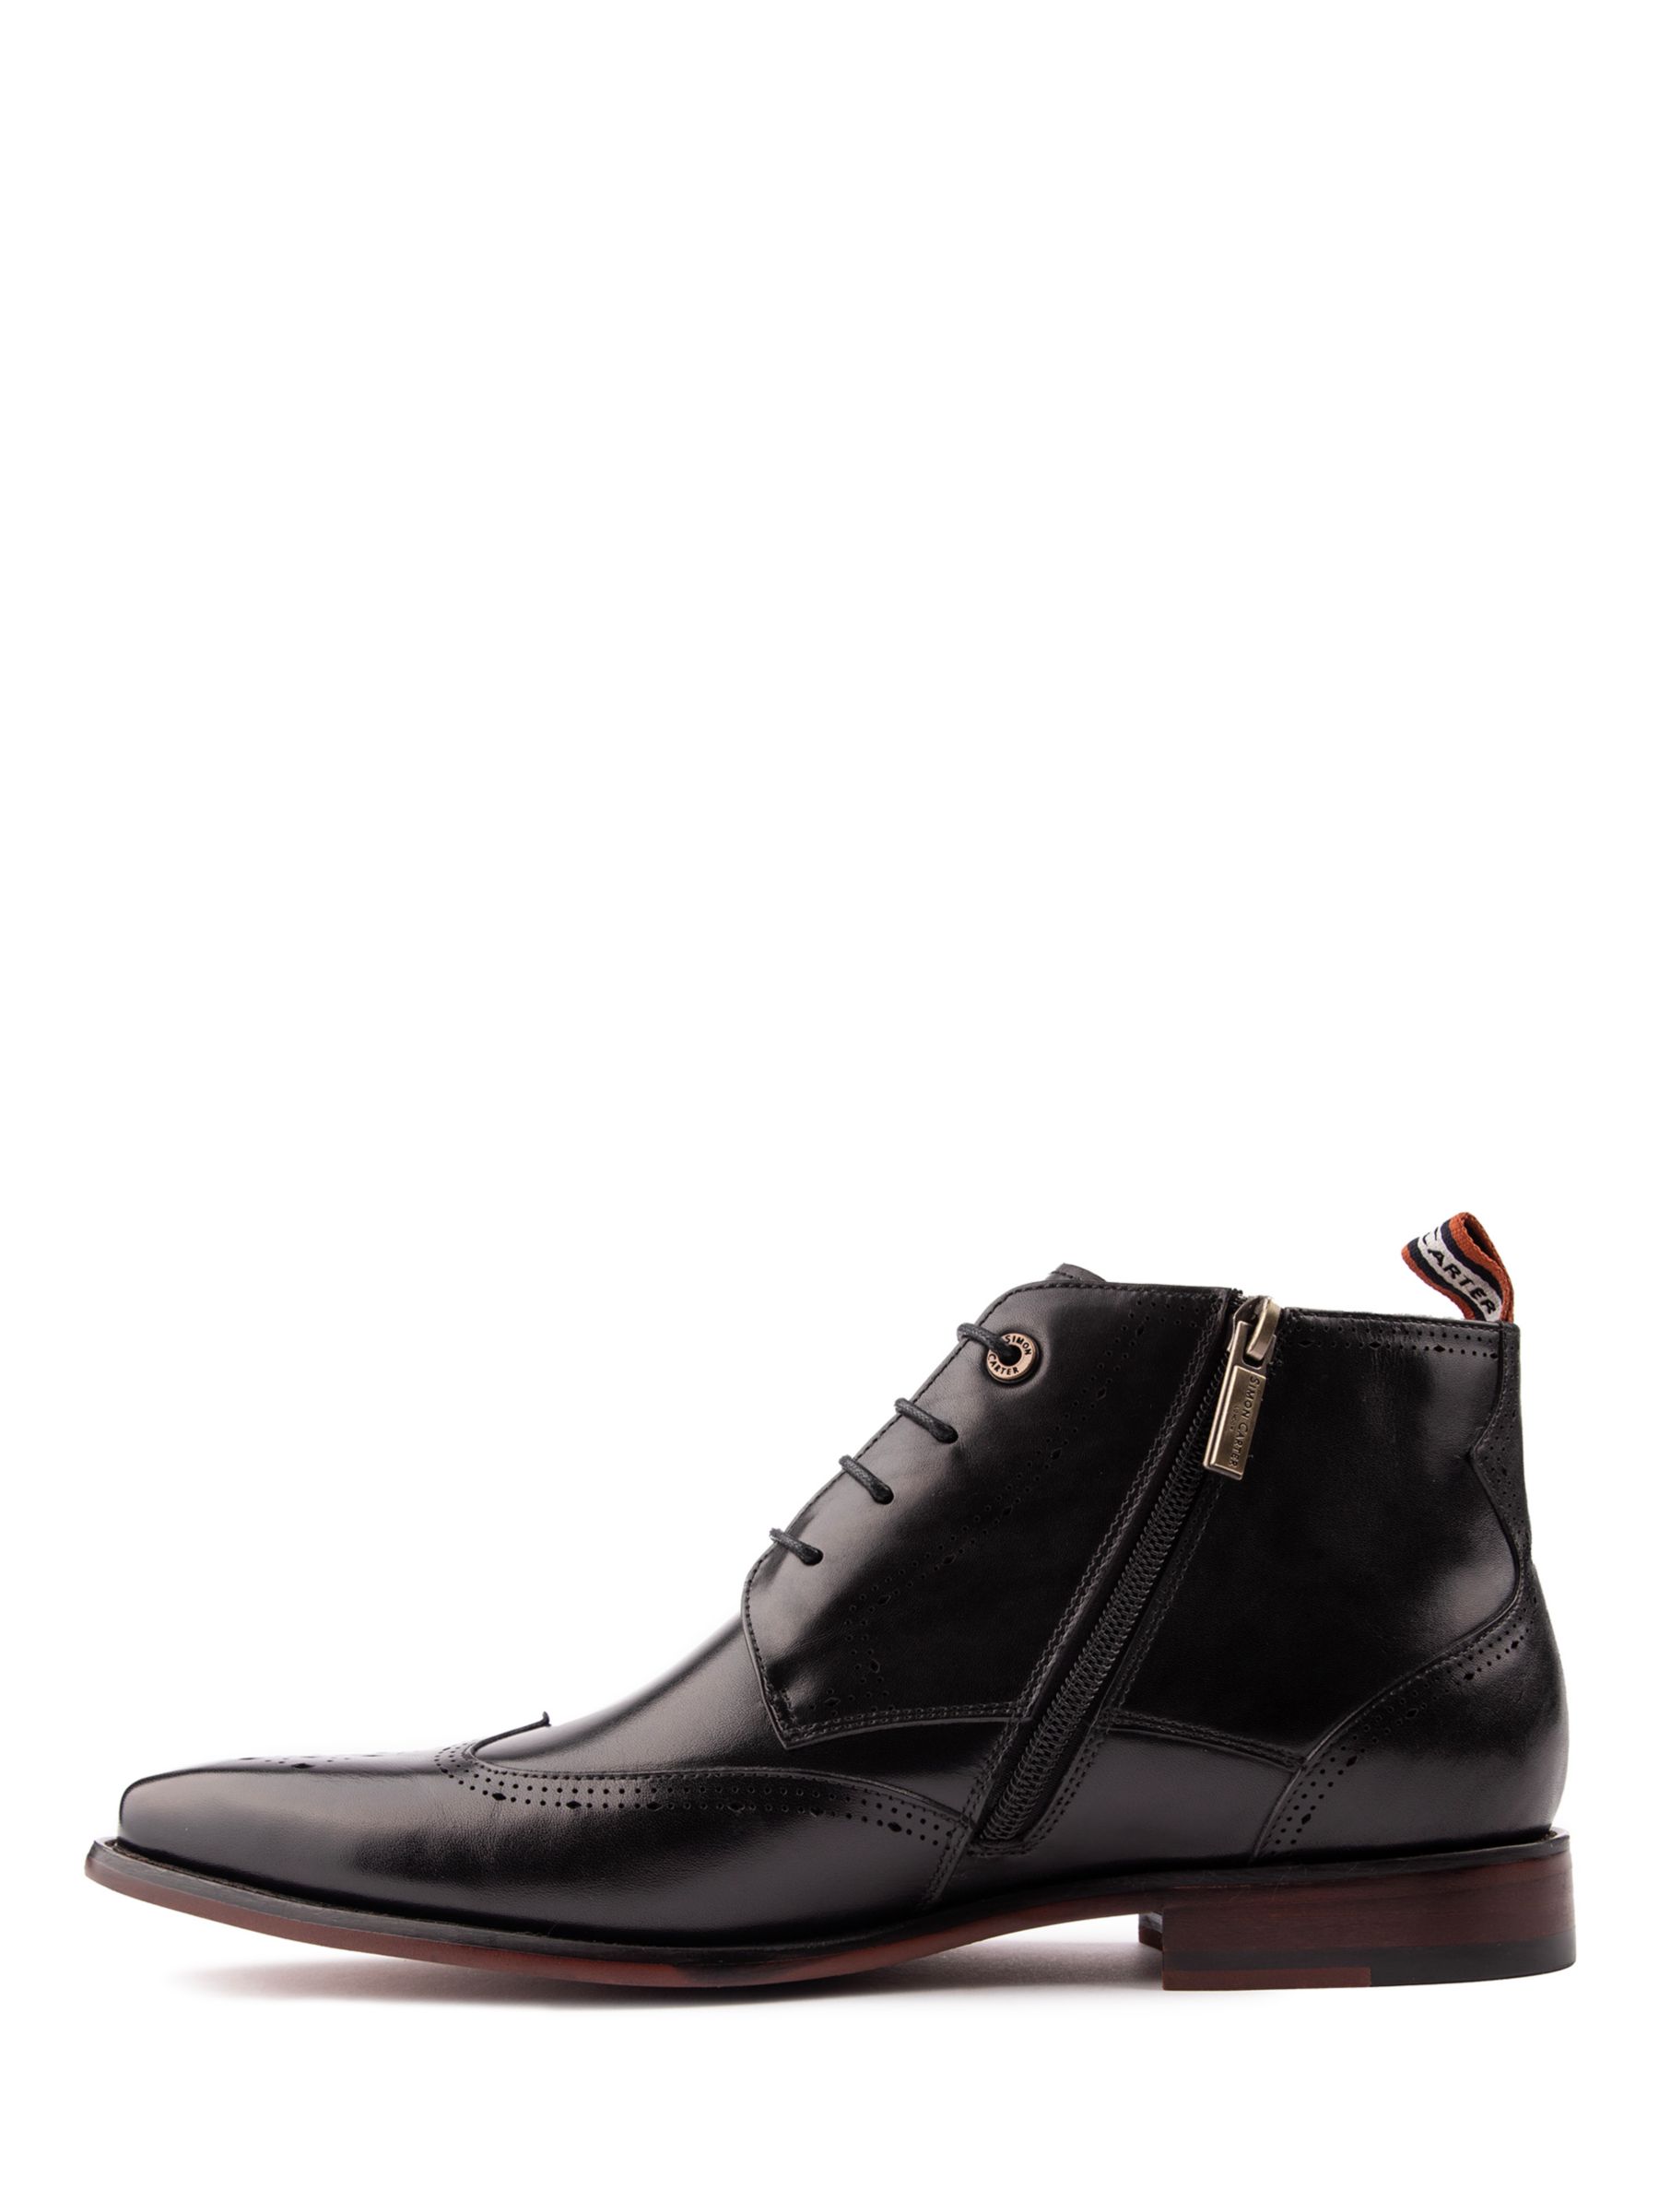 Simon Carter Whisker Leather Chukka Boots, Black, 9